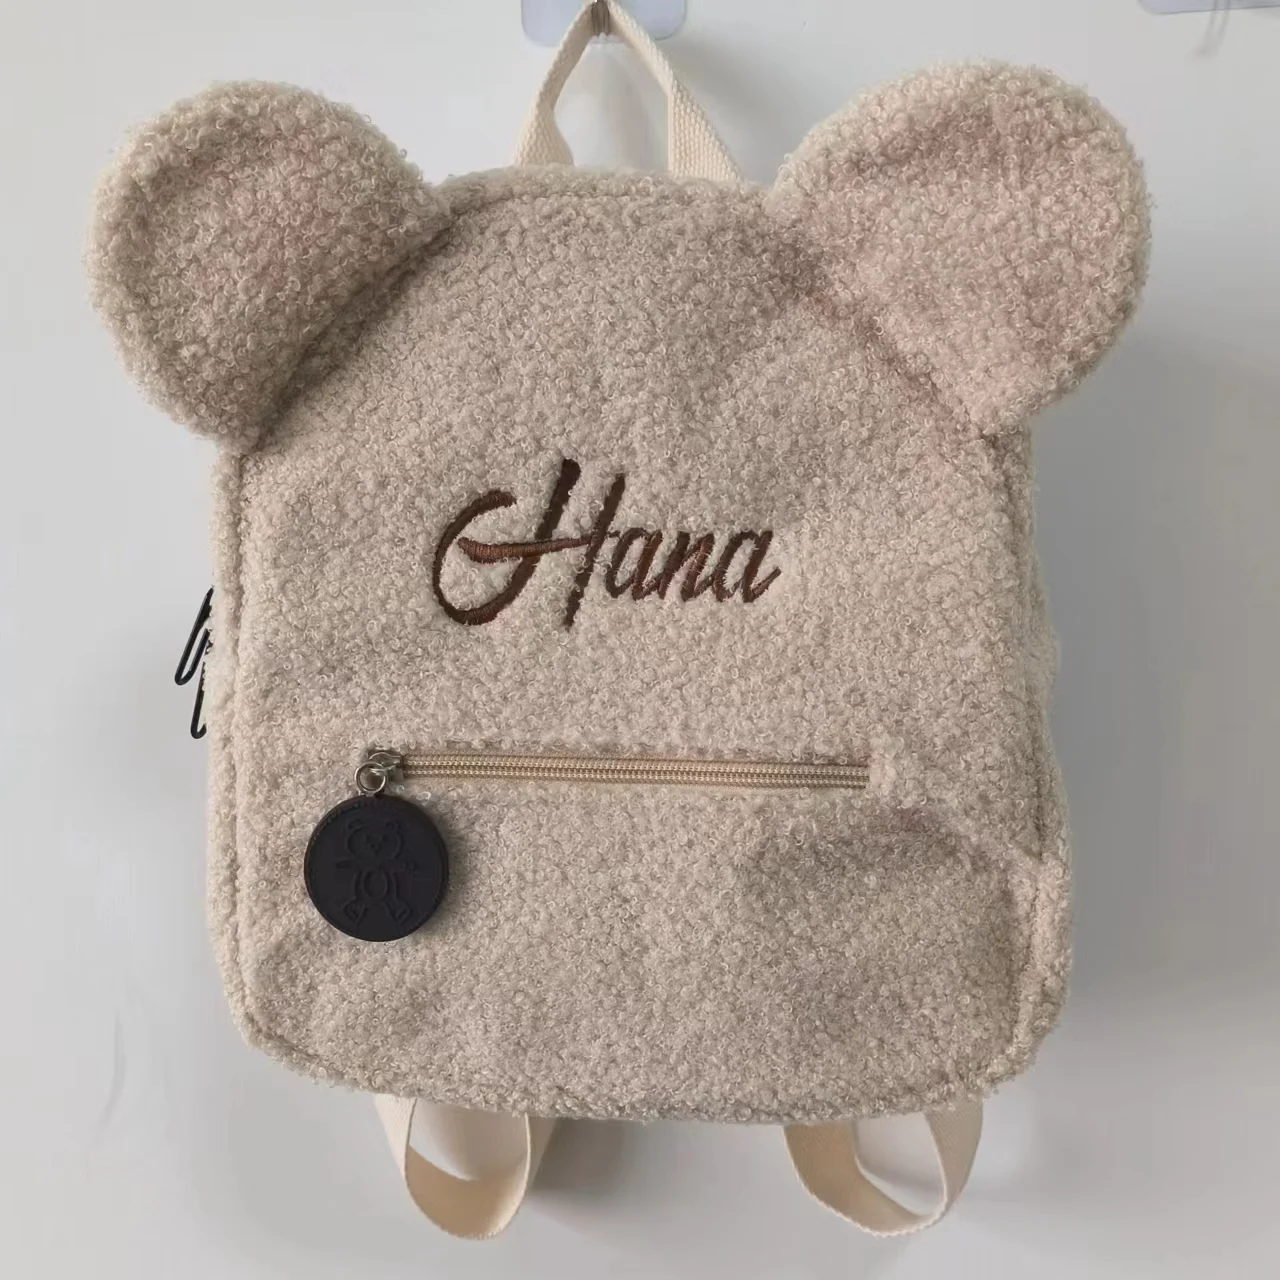 Mochila de oso de peluche con nombre bordado para niños, bolsos de hombro personalizados para exteriores, bolsas de regalo para niños, Otoño e Invierno